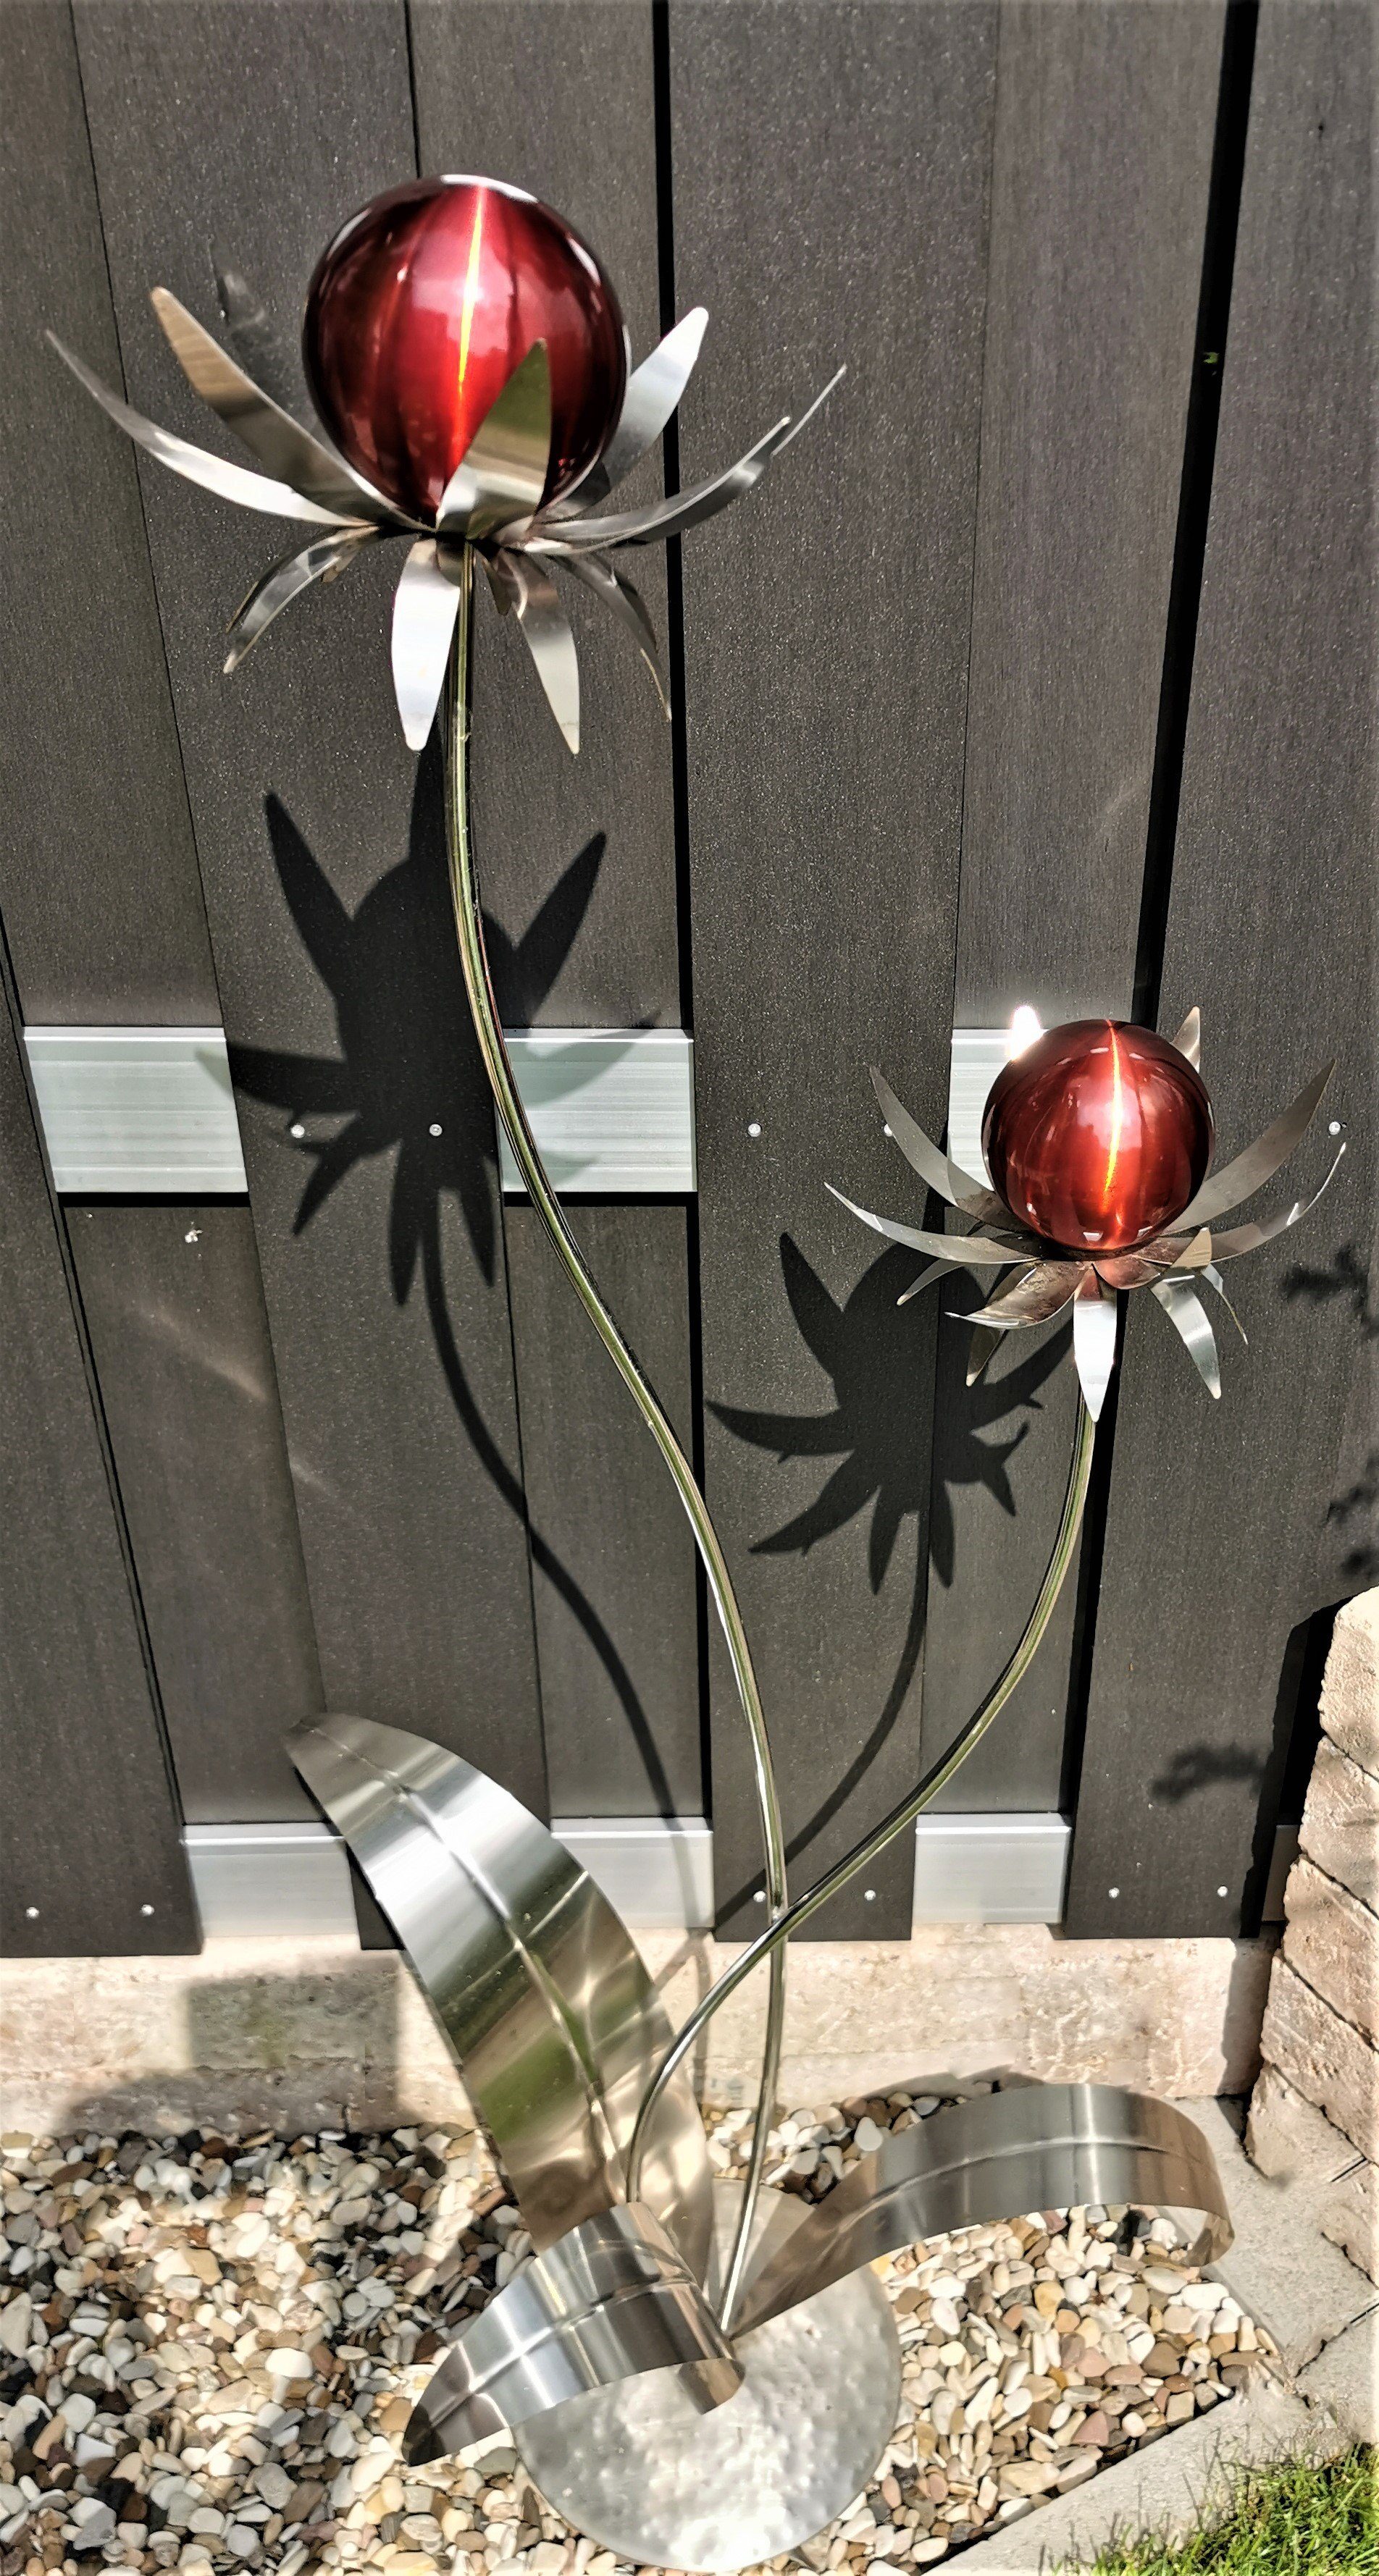 Jürgen Bocker Garten-Ambiente Gartenstecker Skulptur Blume matt Kugel 120cm rot Milano Standfuß Gartendeko Edelstahl gebürstet